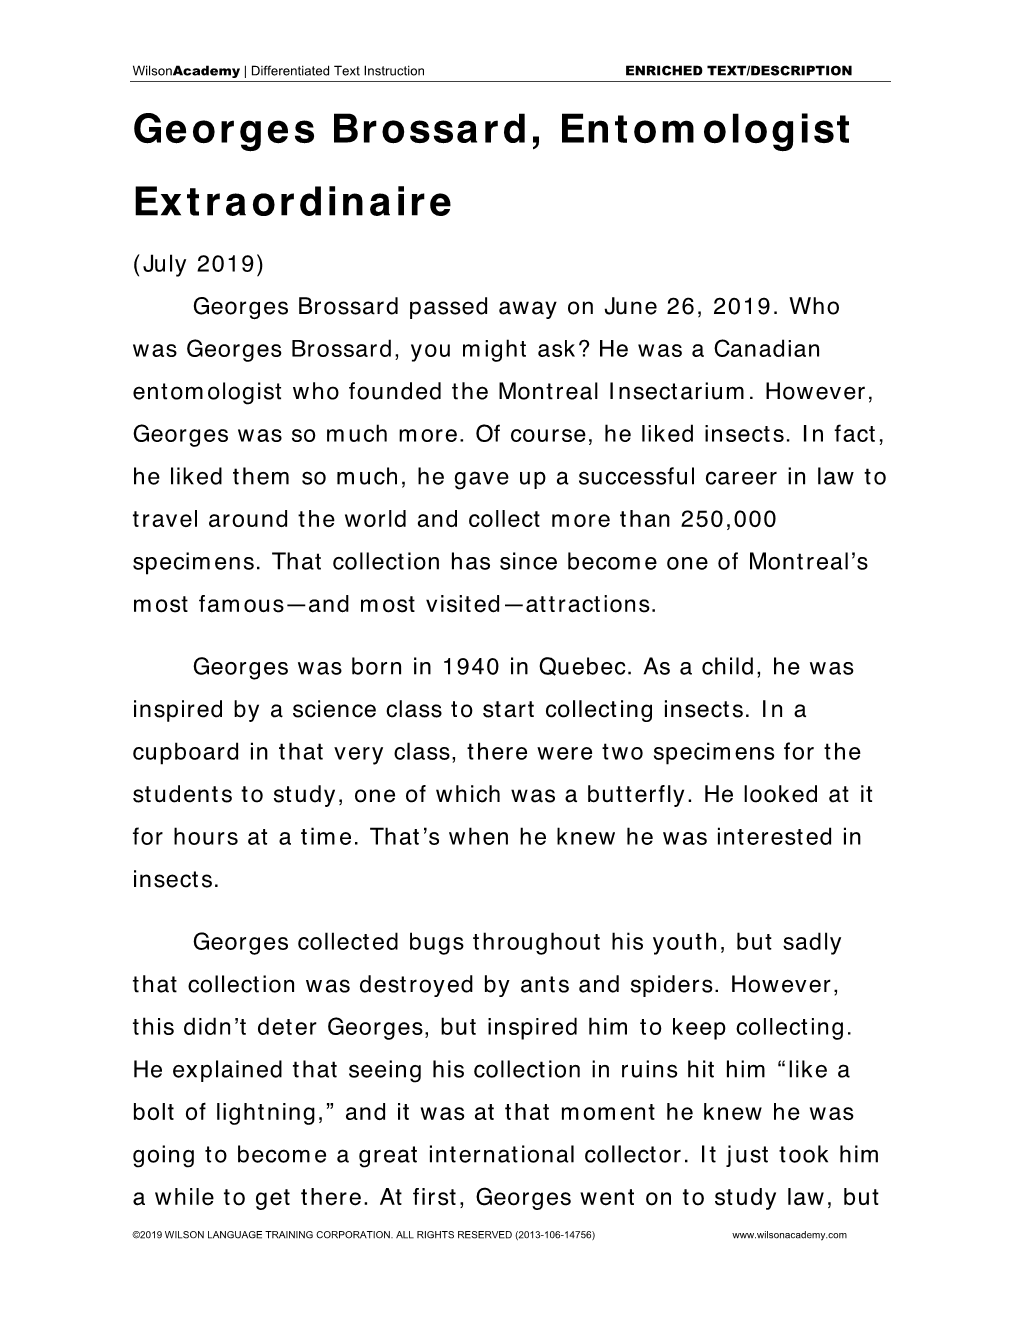 Georges Brossard, Entomologist Extraordinaire